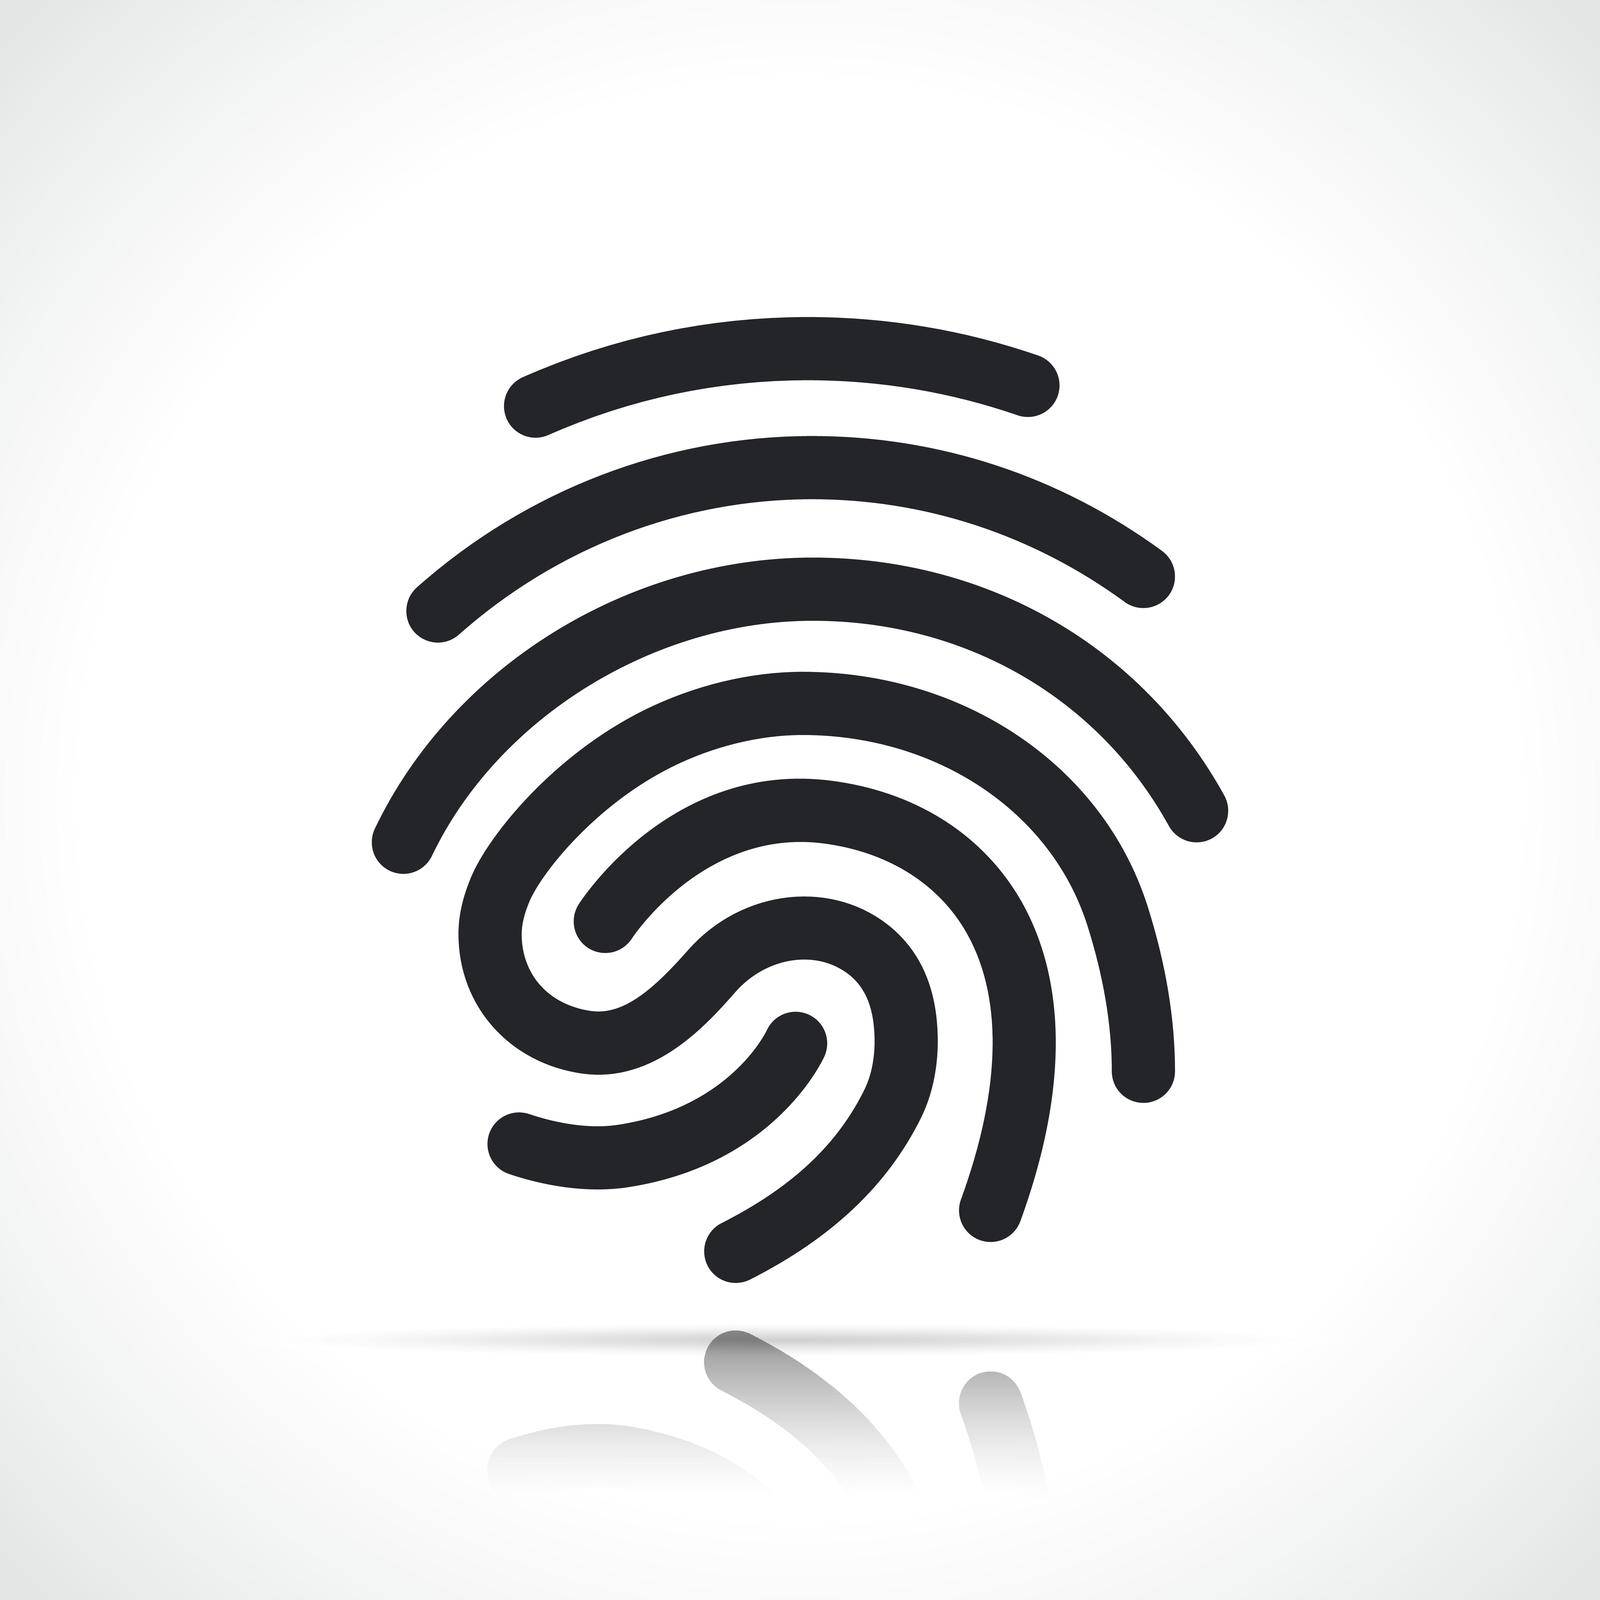 human fingerprint or finger print icon isolated